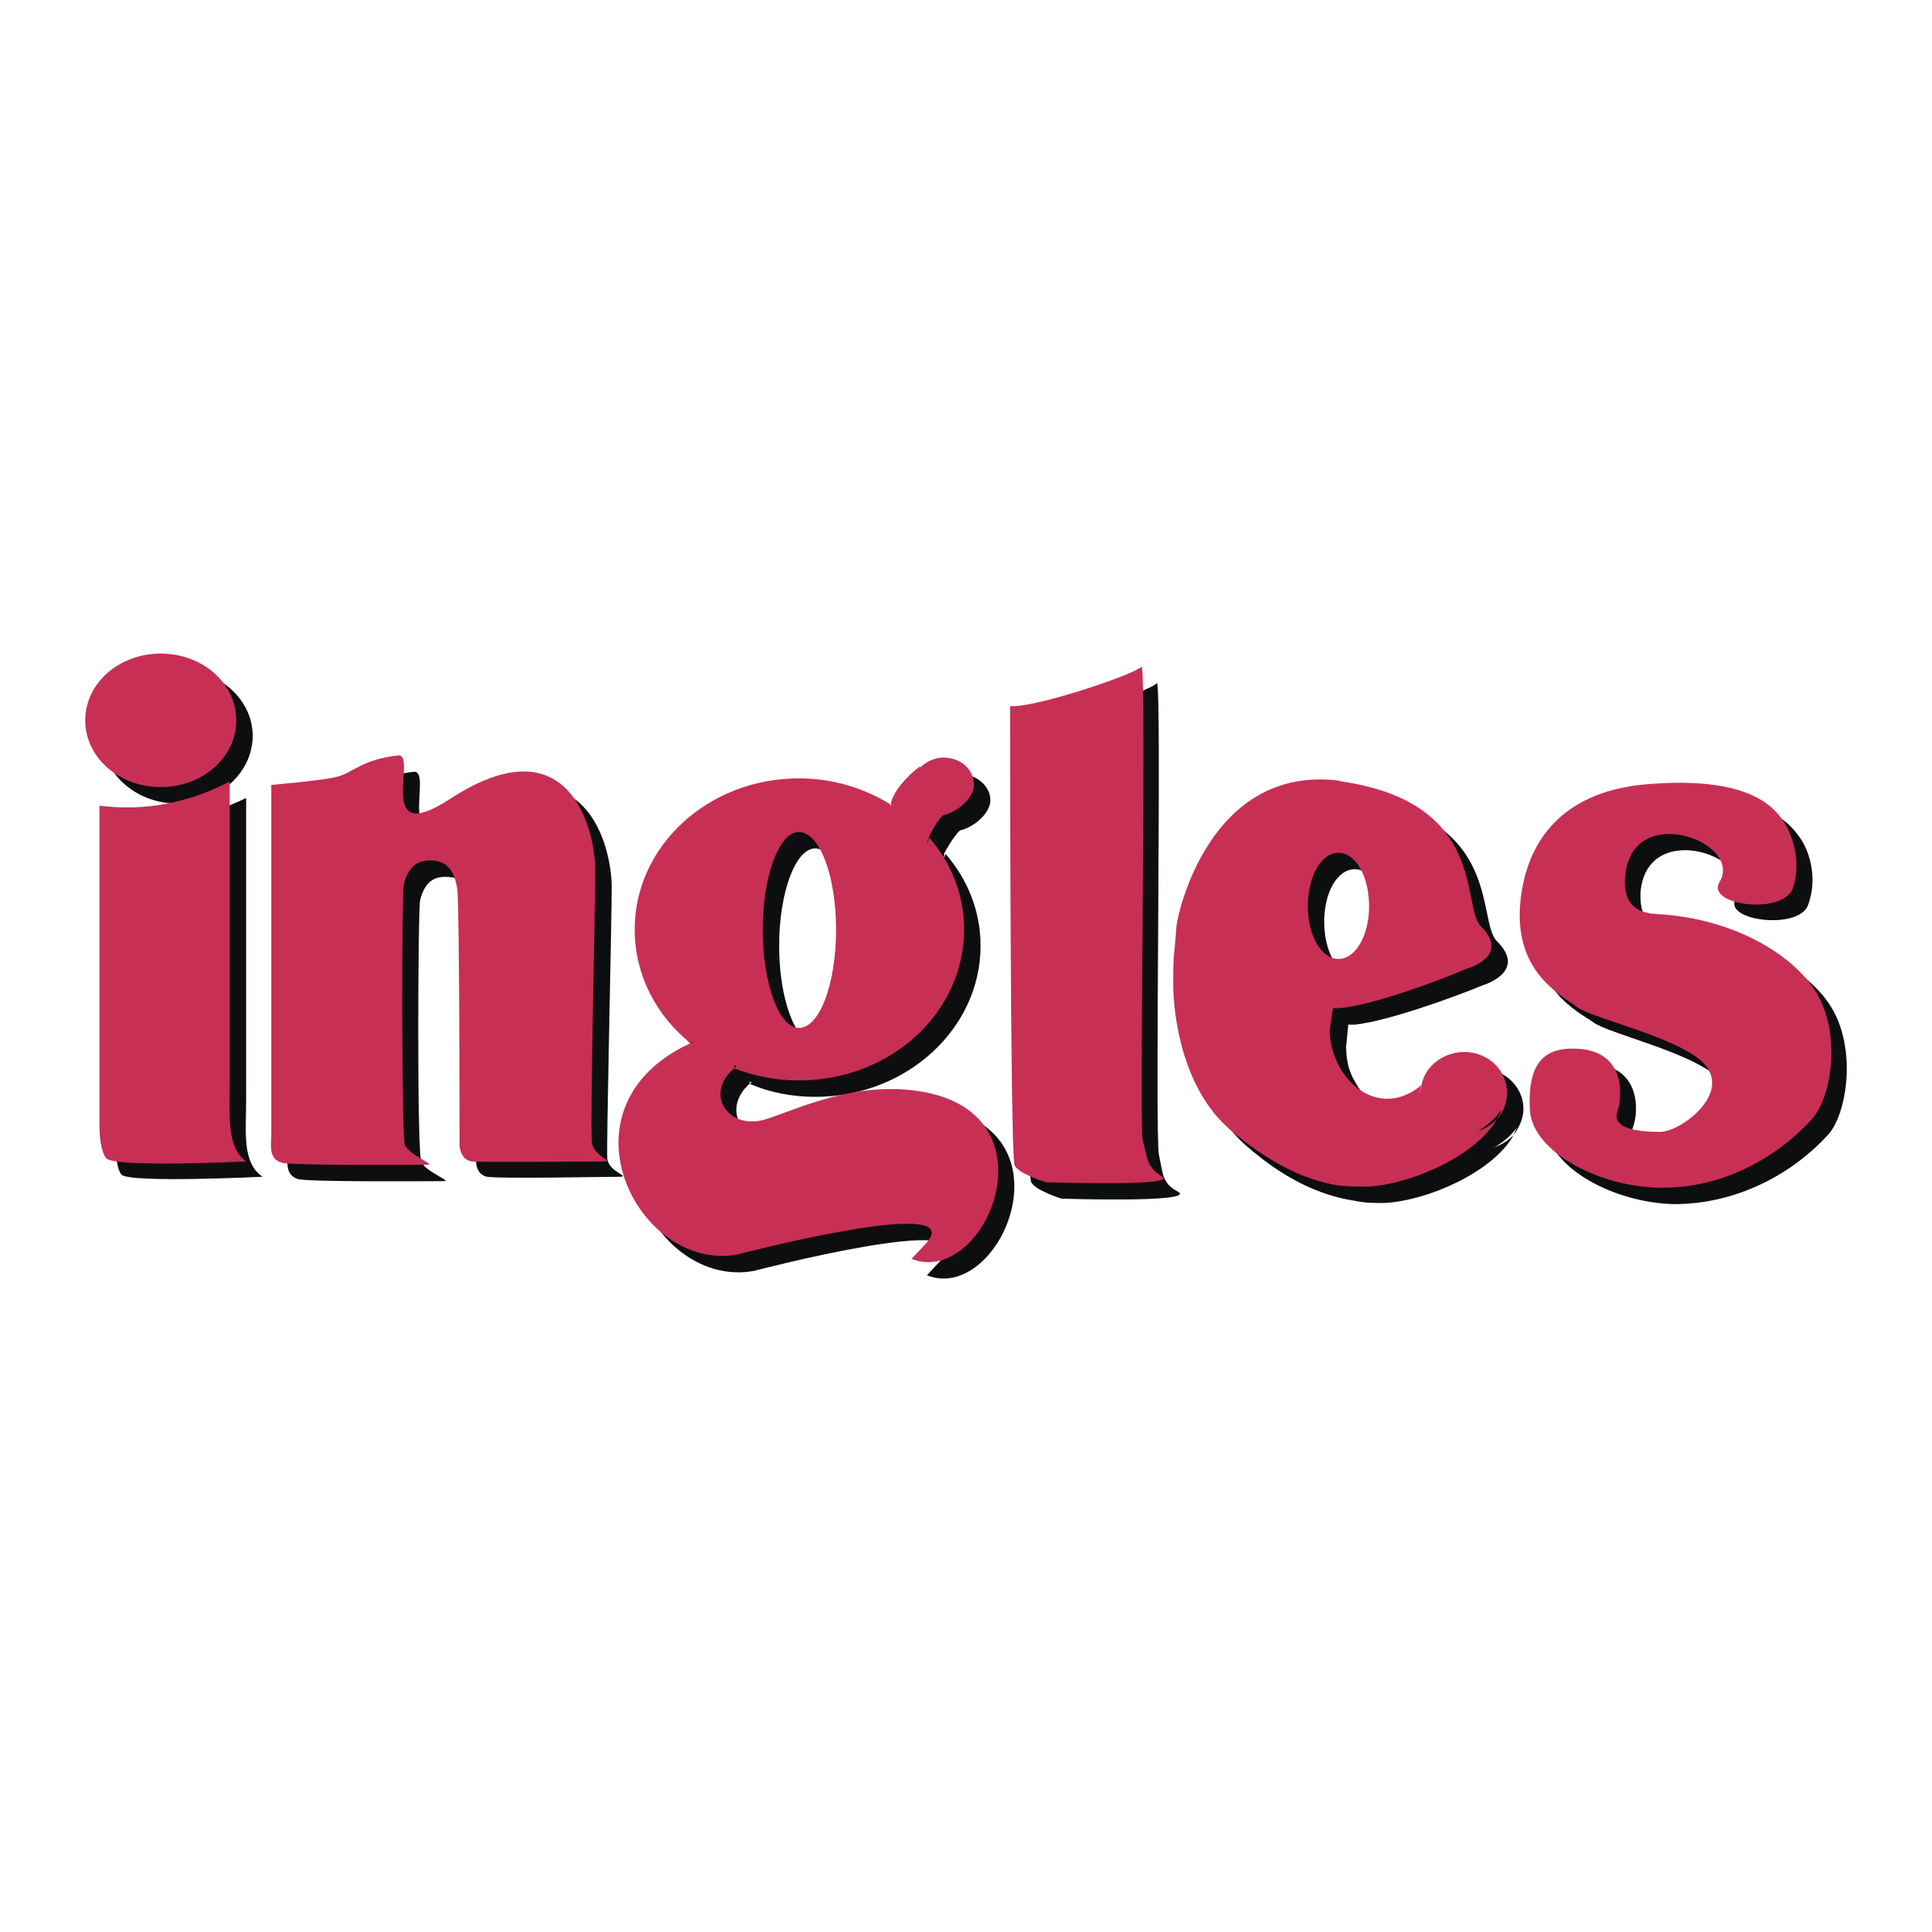 Ingles Logo - Ingles Logo PNG Transparent & SVG Vector - Freebie Supply